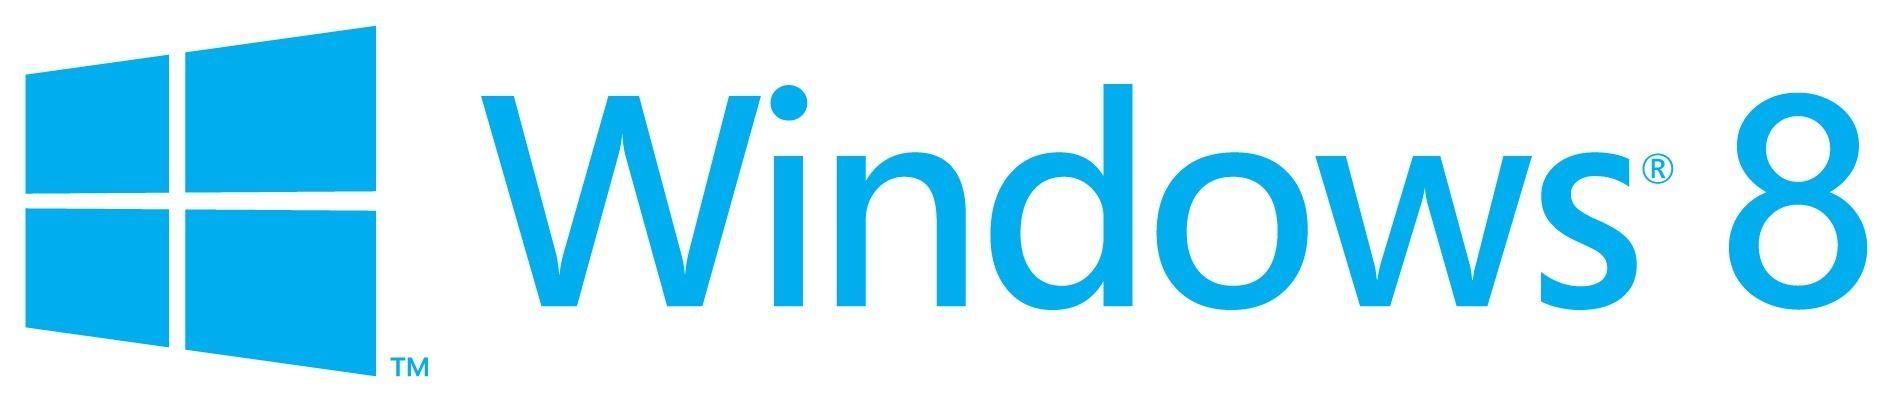 Microsoft Windows 8 Logo - New Windows 8 Logo Is Pure Genius | PCWorld